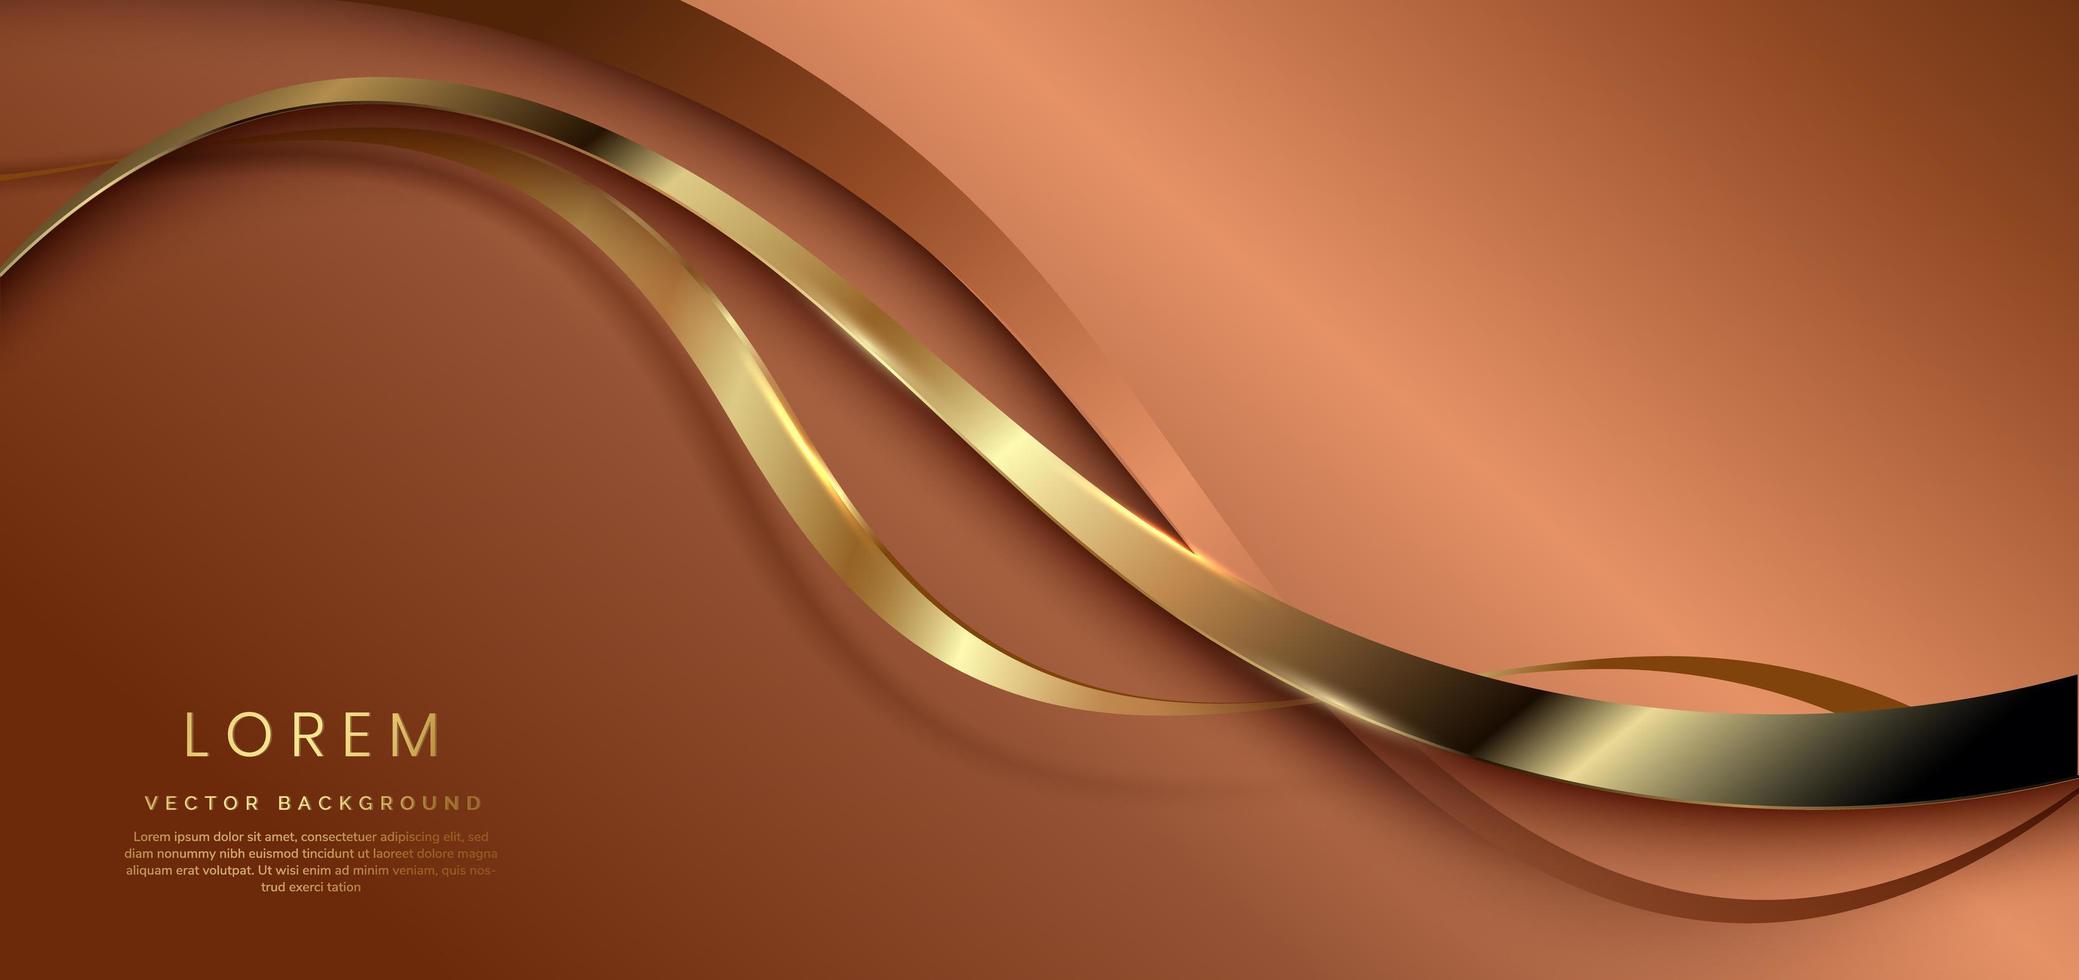 lujo de línea de curva dorada abstracta sobre fondo marrón oscuro con espacio de copia para texto. vector